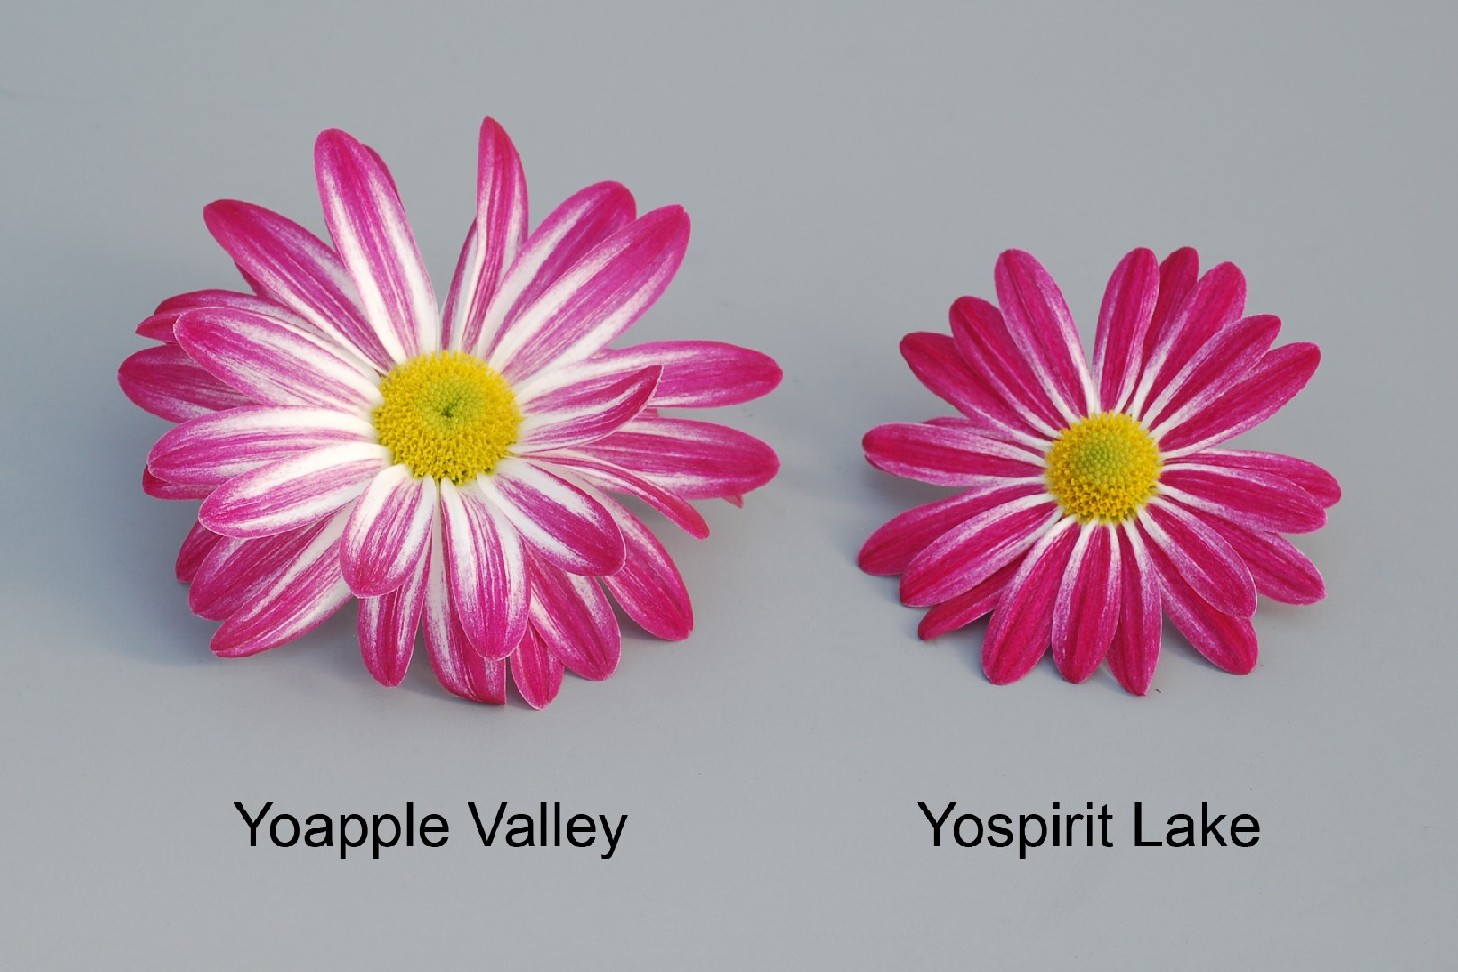 Yoapple Valley